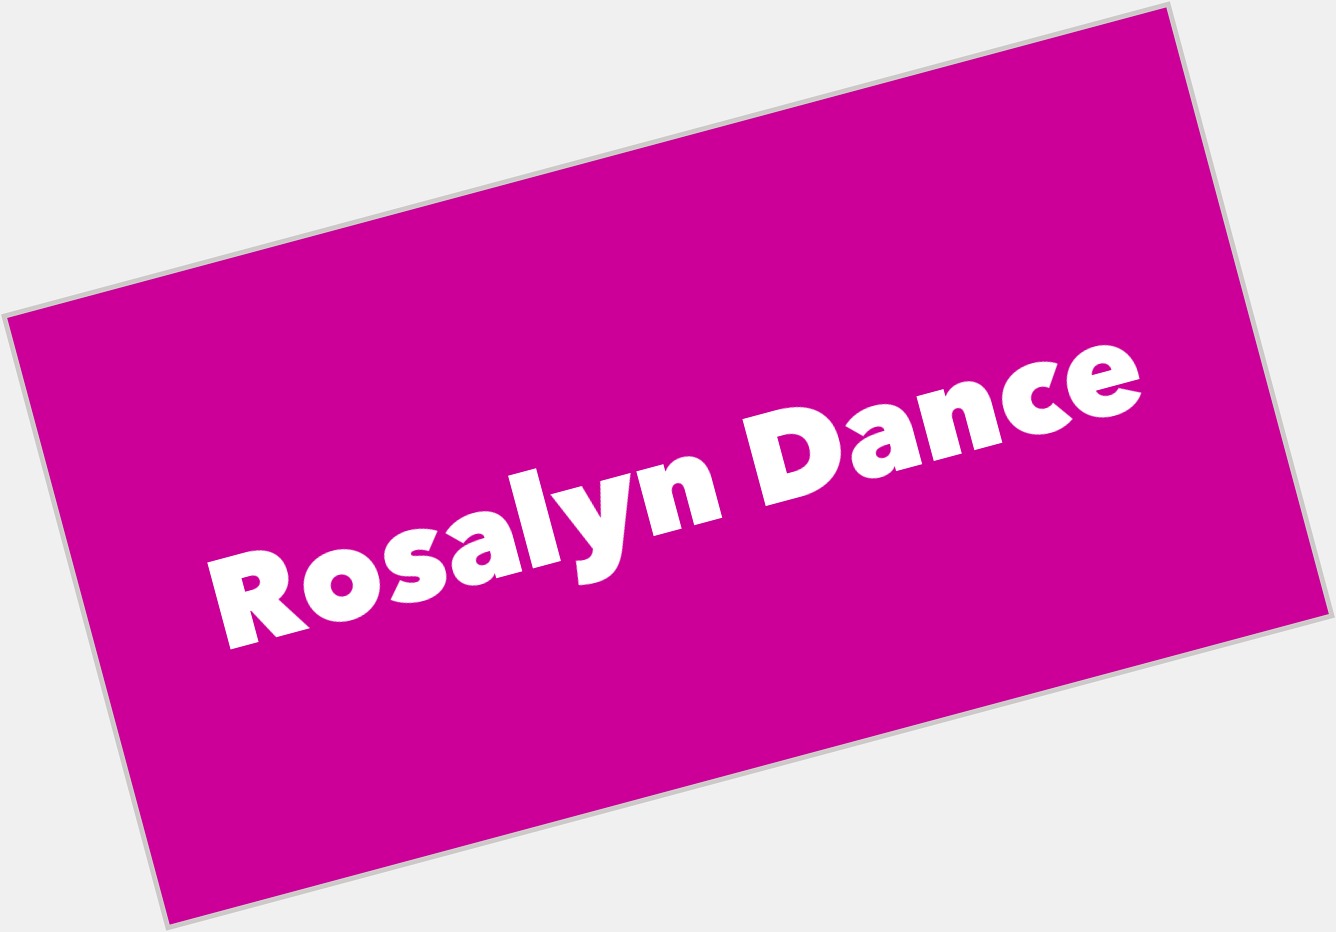 Rosalyn Dance new pic 1